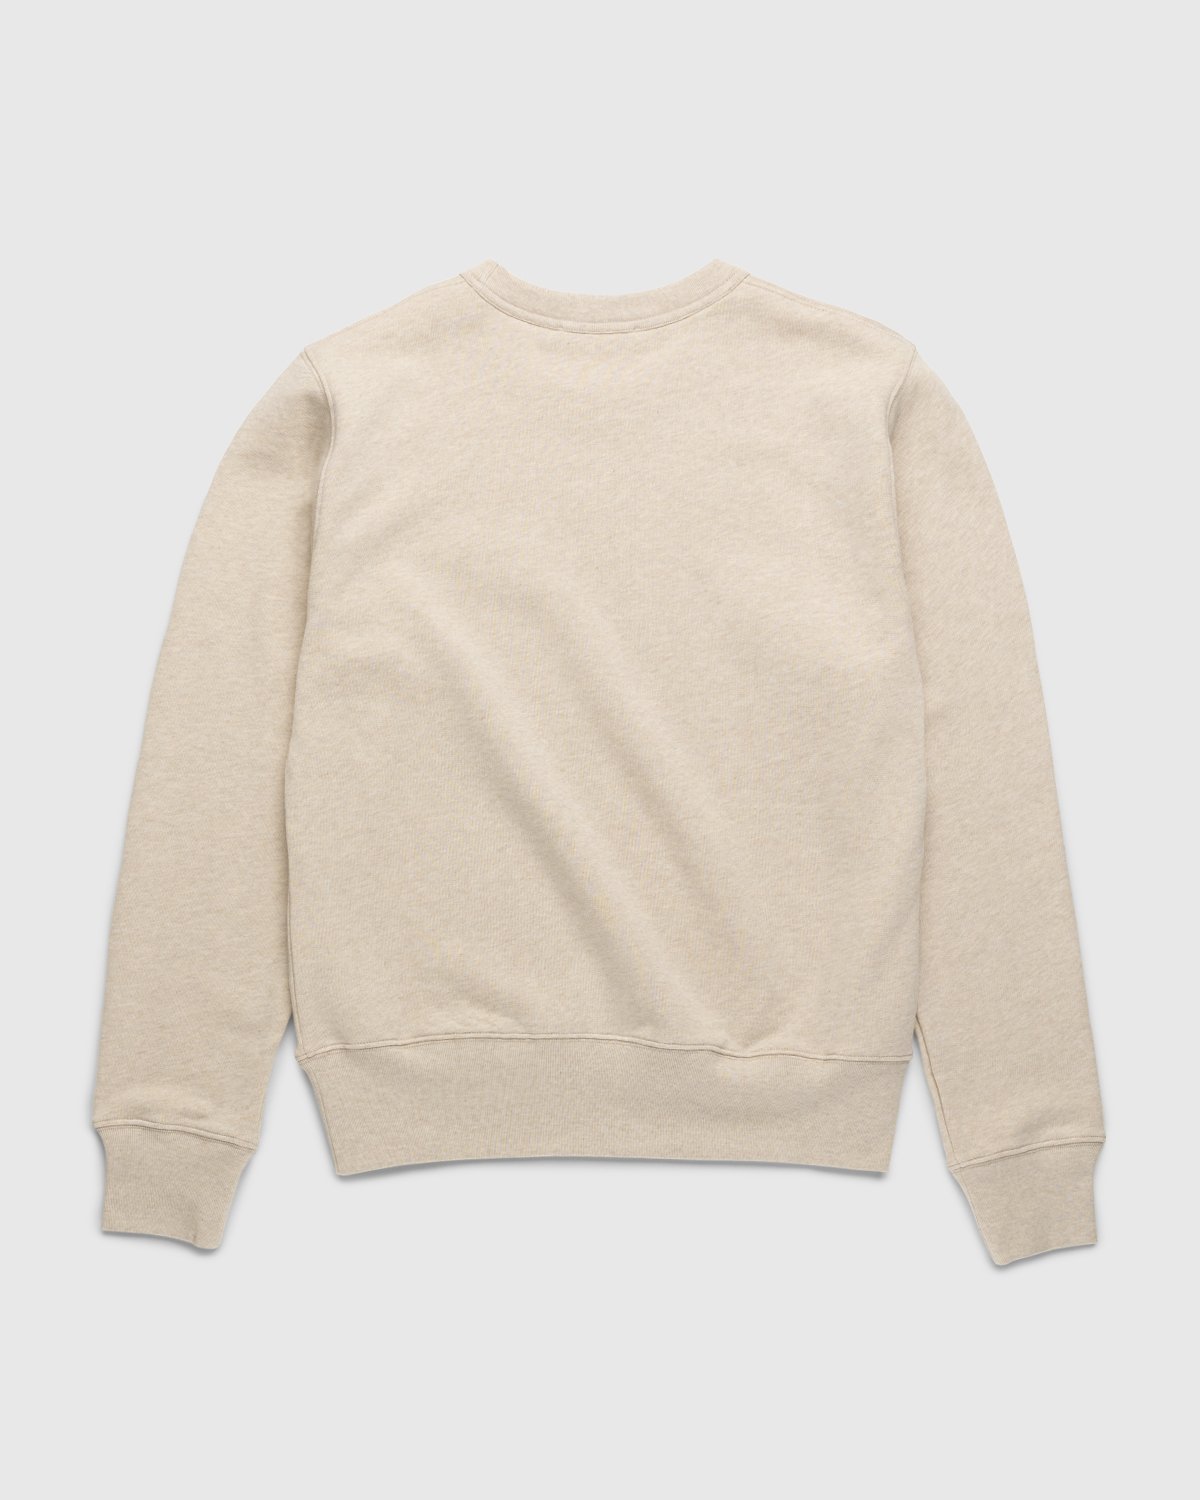 Acne Studios - Organic Cotton Crewneck Sweatshirt Oatmeal Melange - Clothing - Beige - Image 2